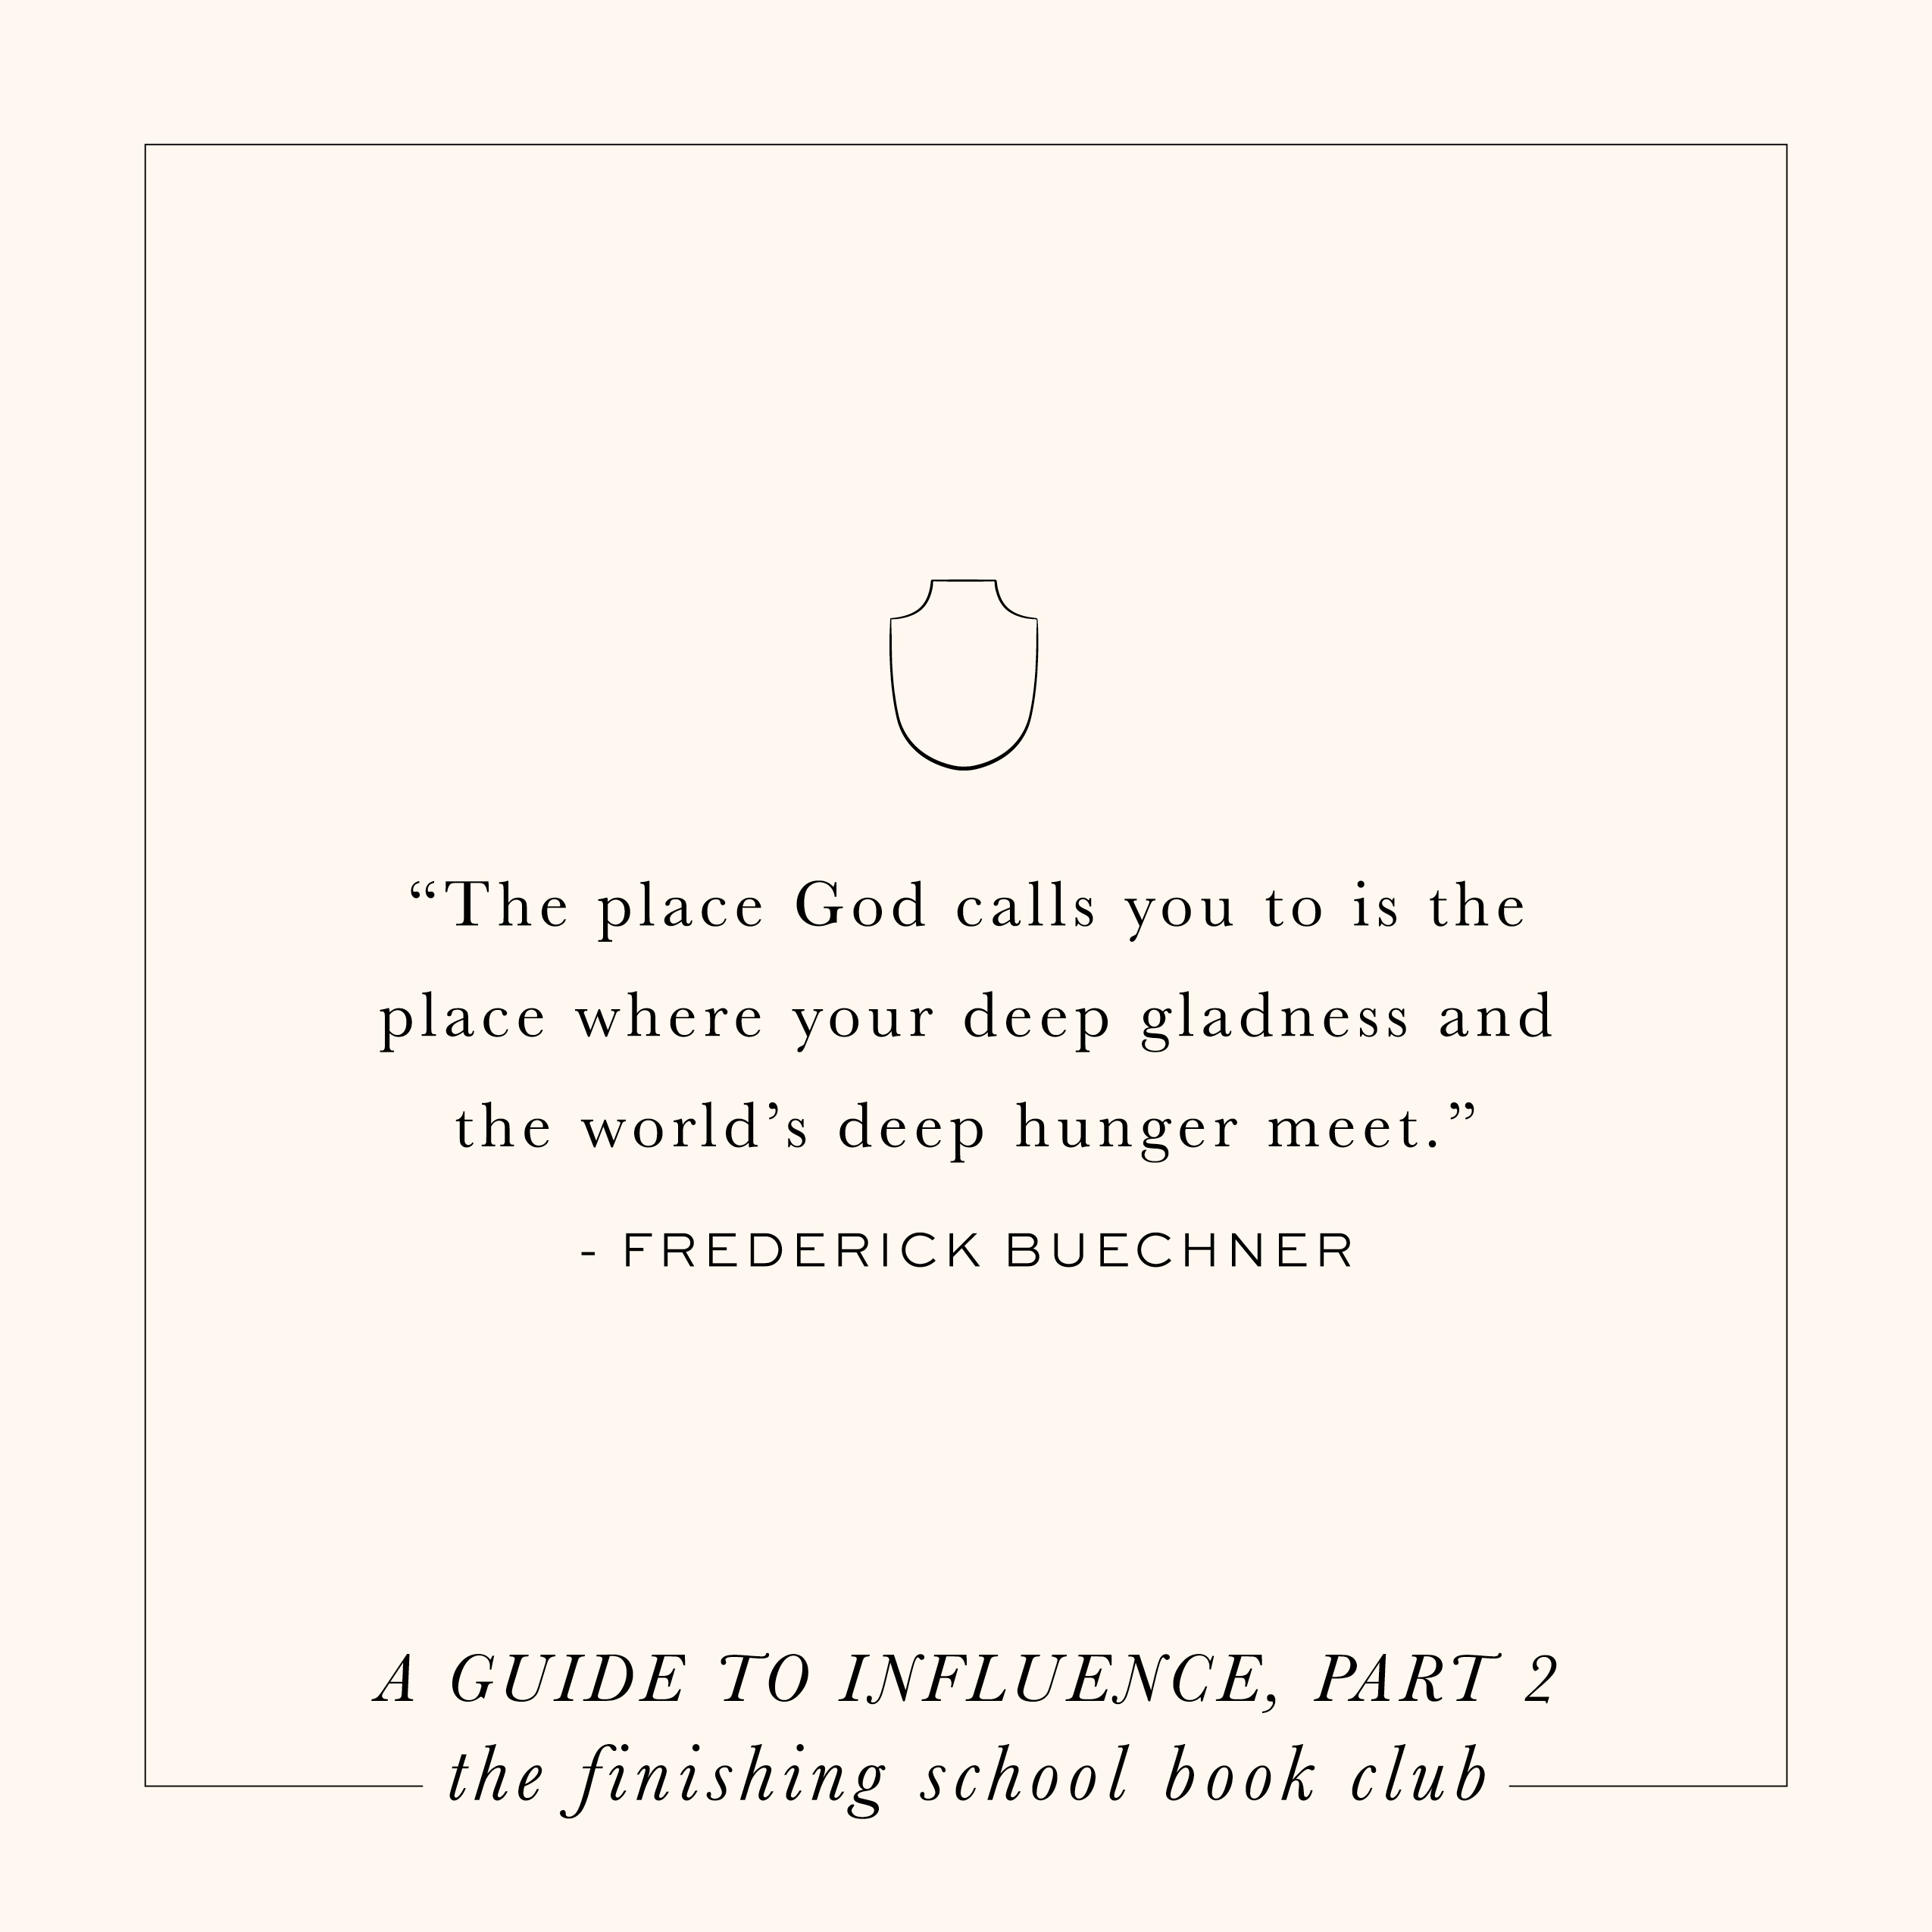 The Finishing School - Influence